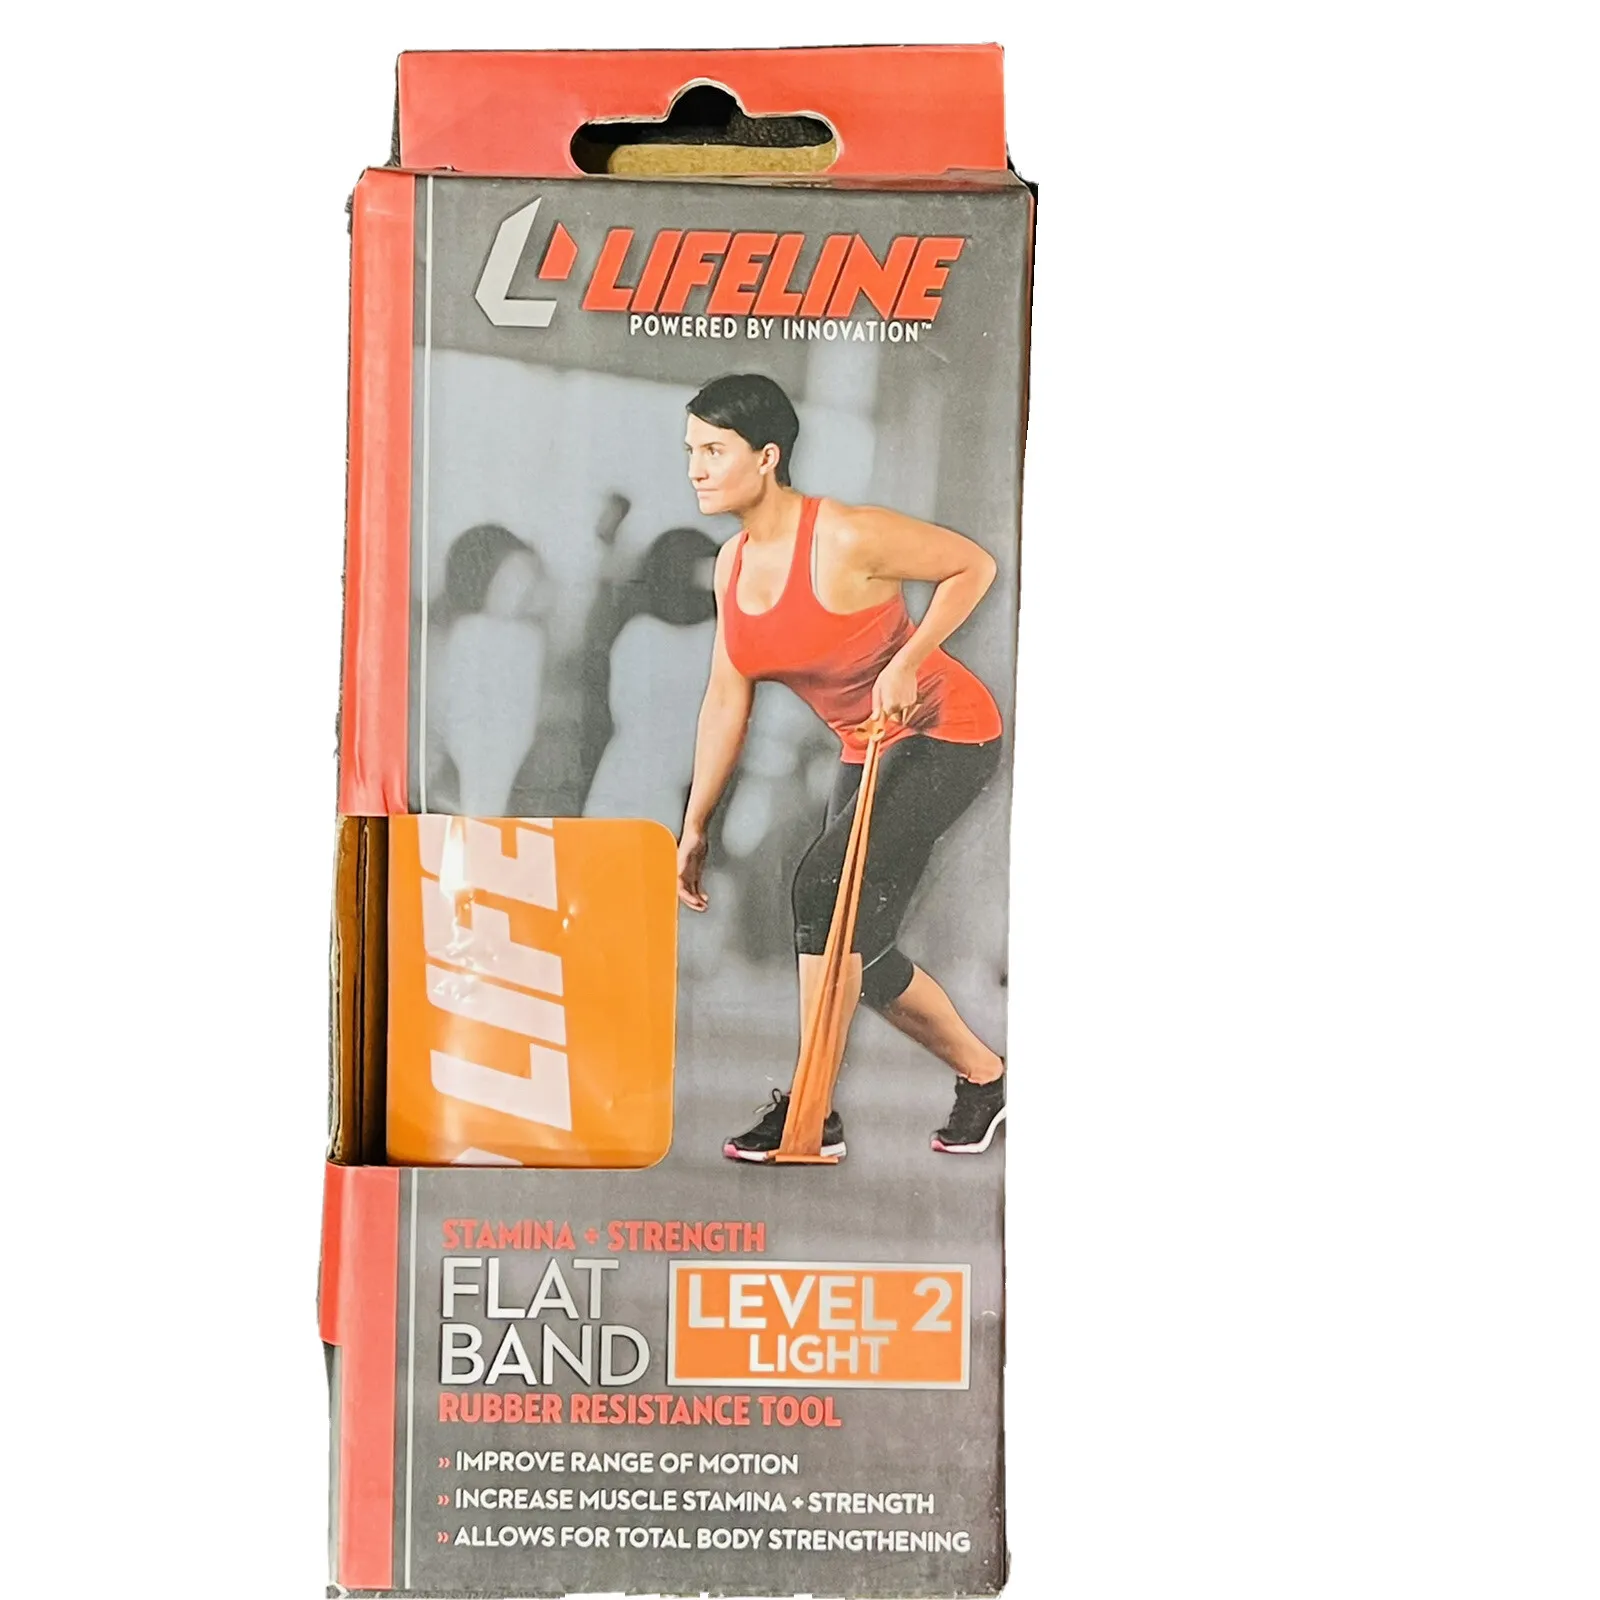 Lifeline Flat Band LEVEL 2 Light - Rubber Resistance Tool - Stamina & Strength